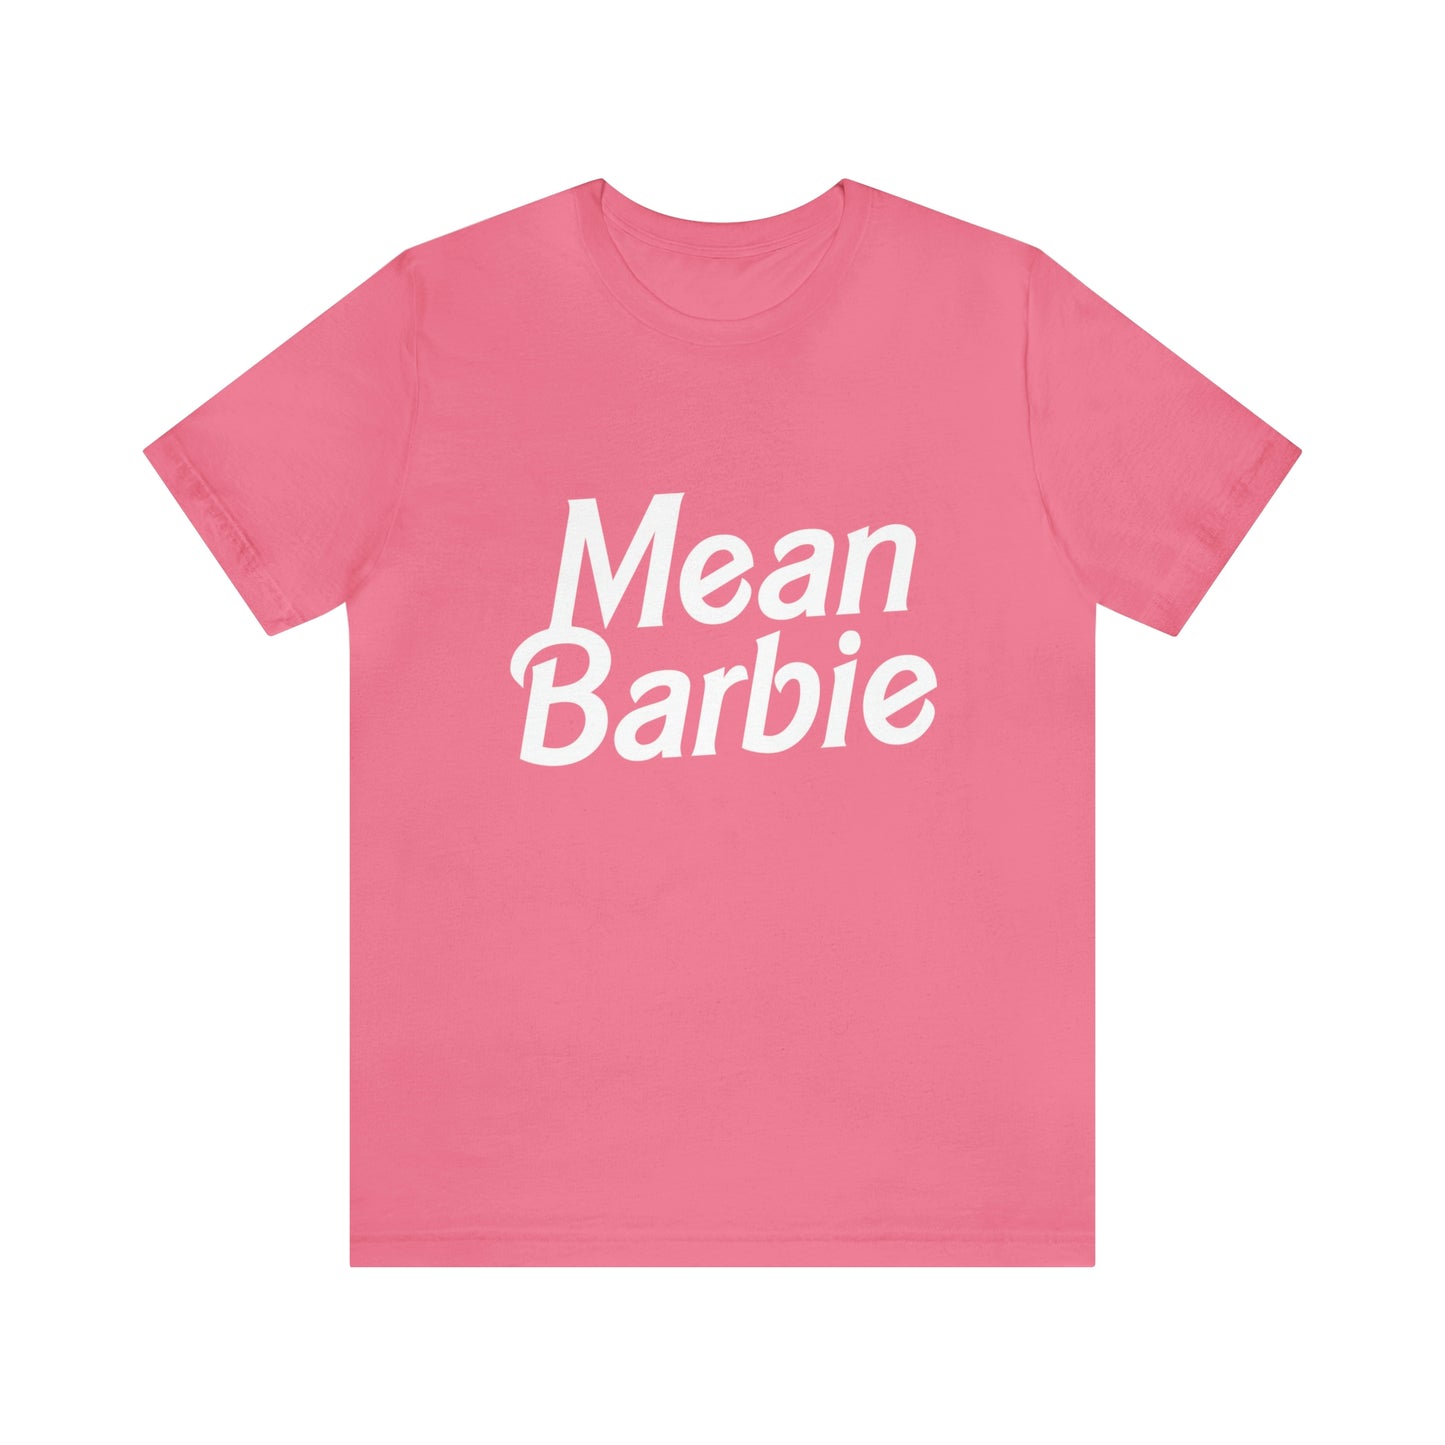 Mean Barbie